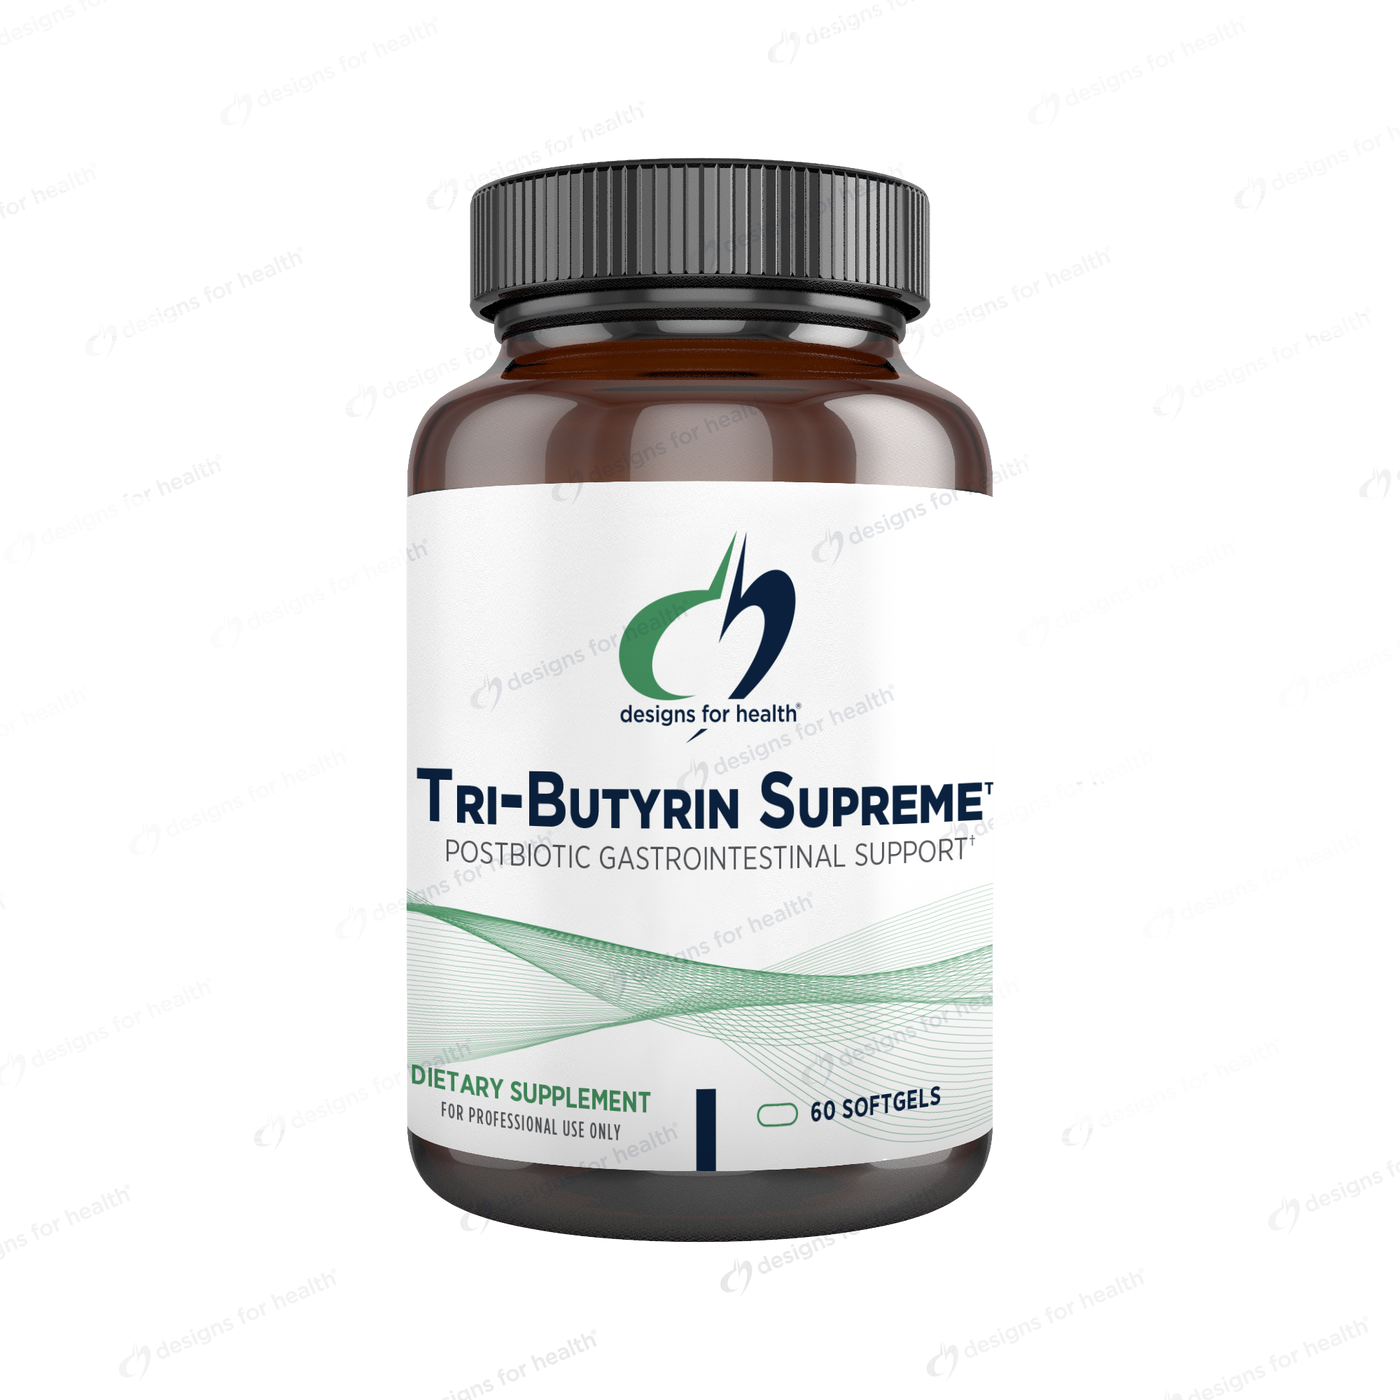 Tri-Butyrin Supreme  Curated Wellness